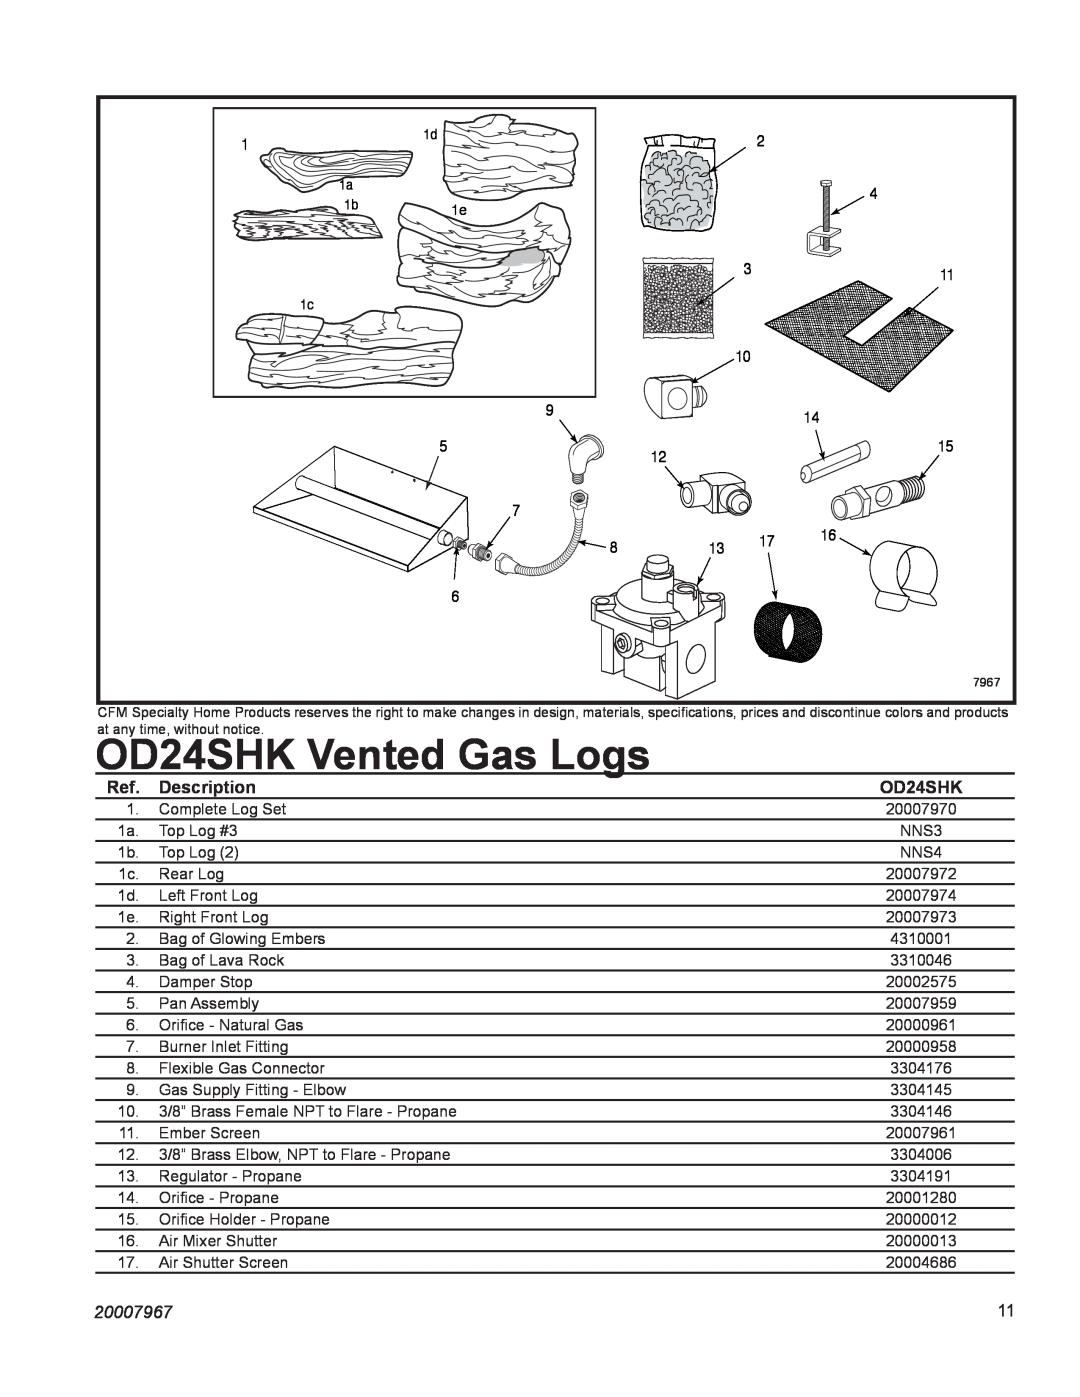 Vermont Casting P, OD24SHKN manual OD24SHK Vented Gas Logs, Description, 20007967 